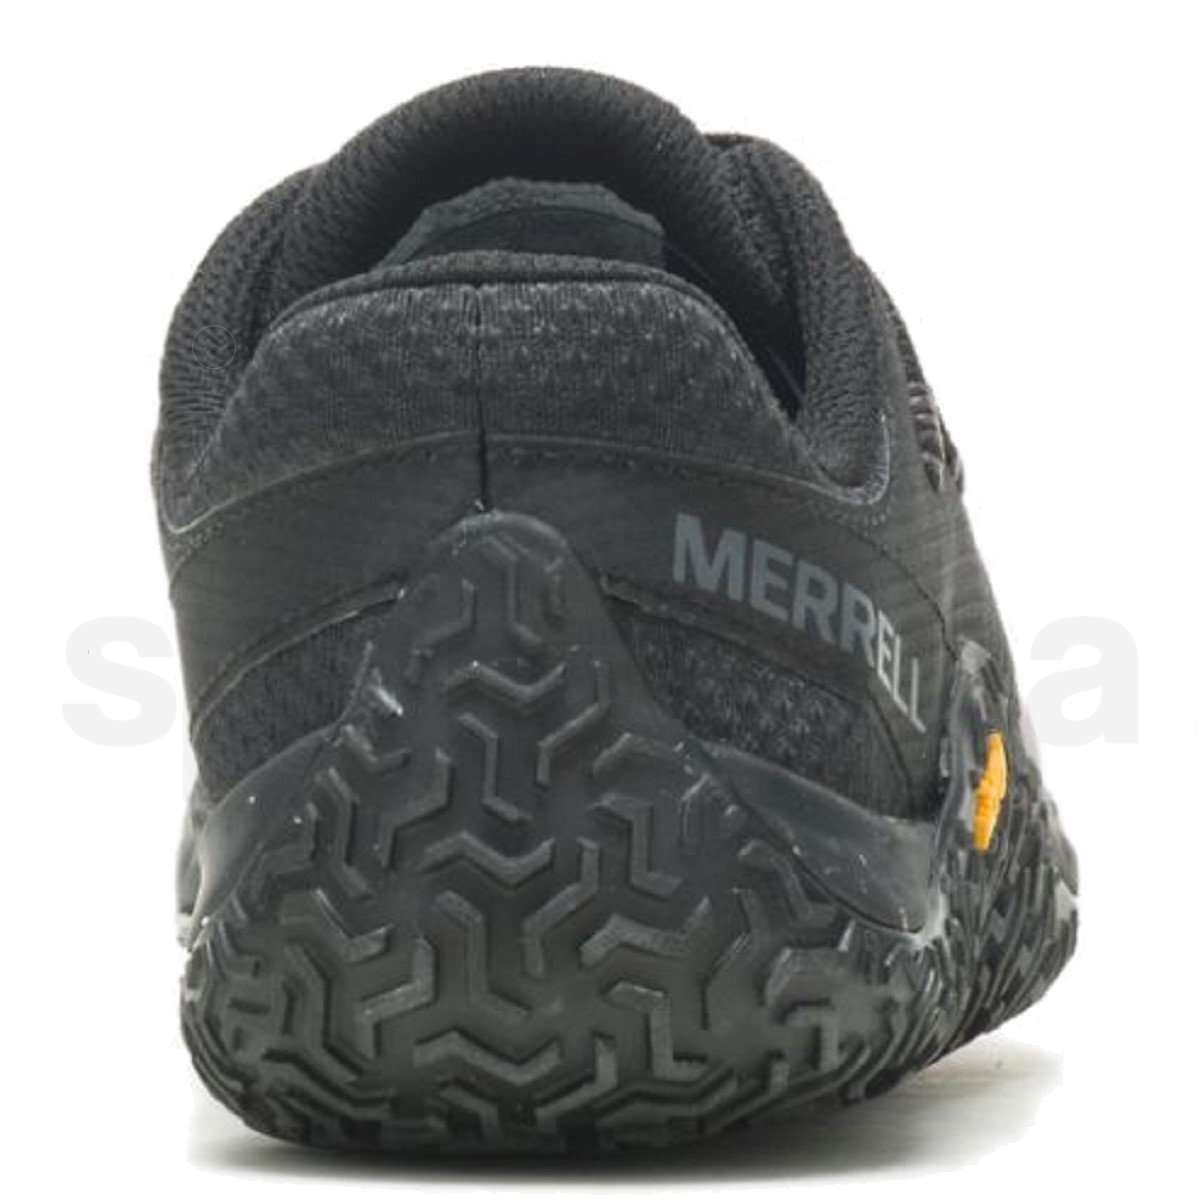 Obuv Merrell Trail Glove 7 W - černá